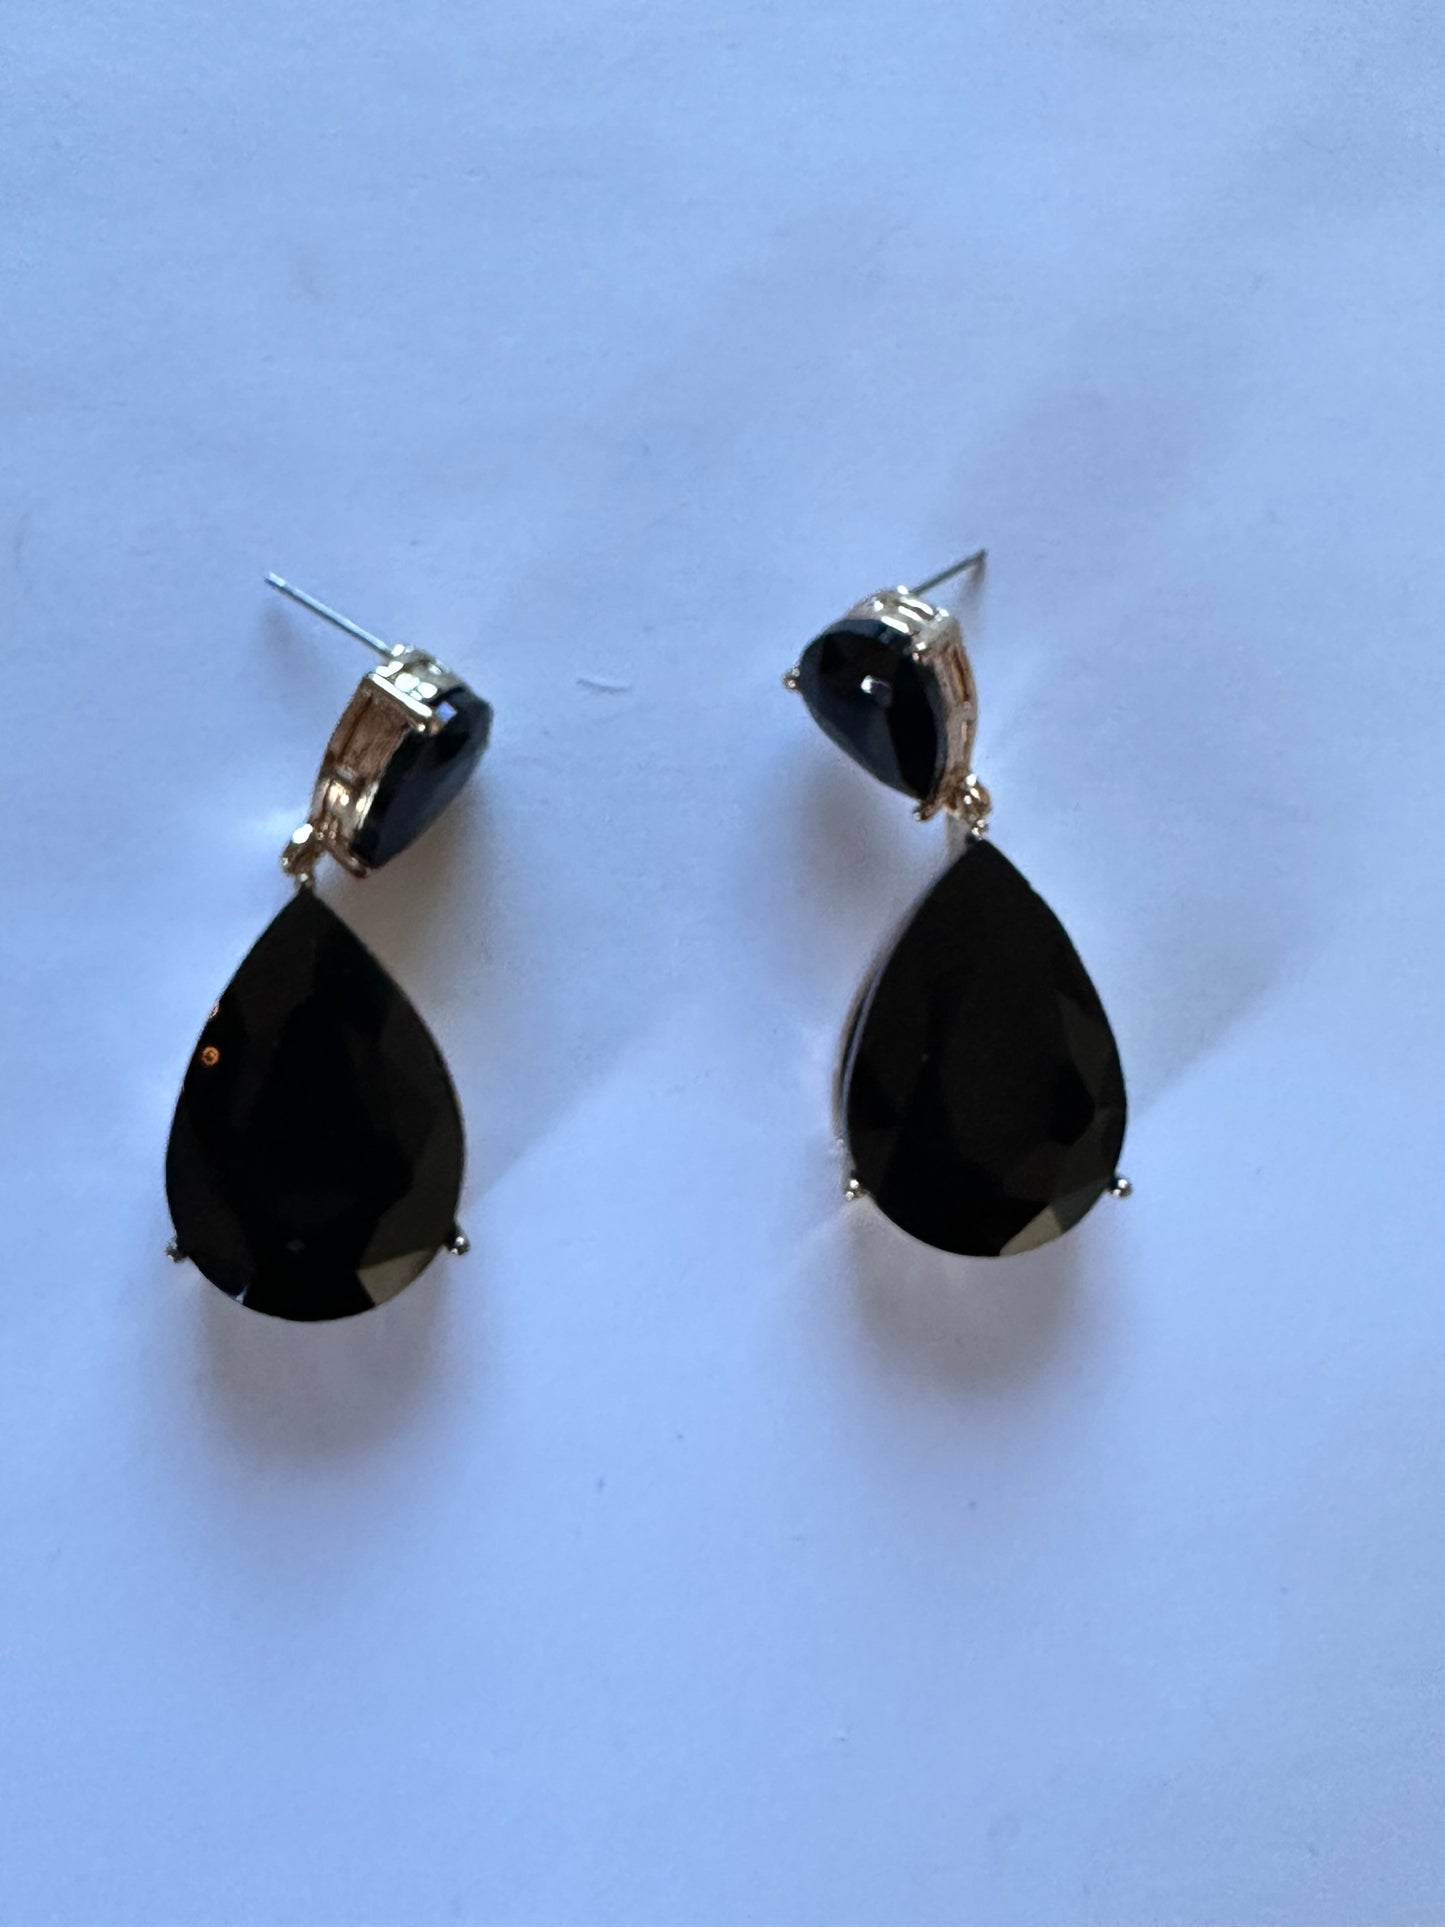 MAD MEN: Betty Draper's Vintage Deco Earring Sets